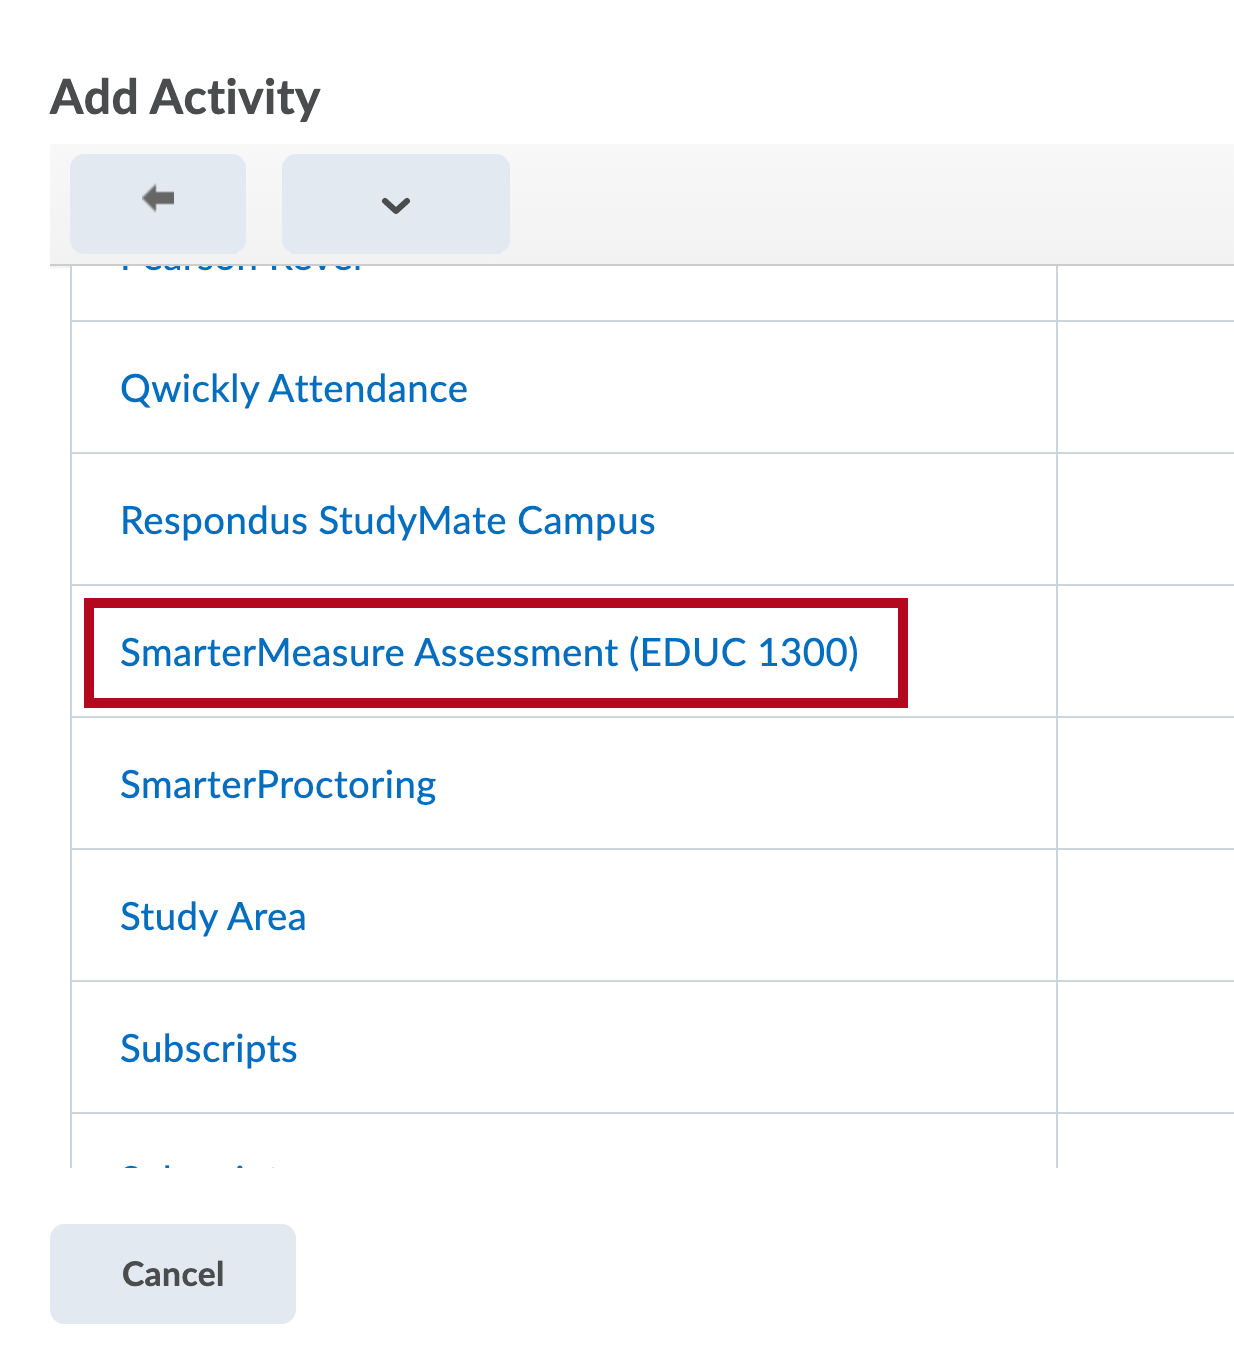 Identifies SmarterMeasure EDUC-1300